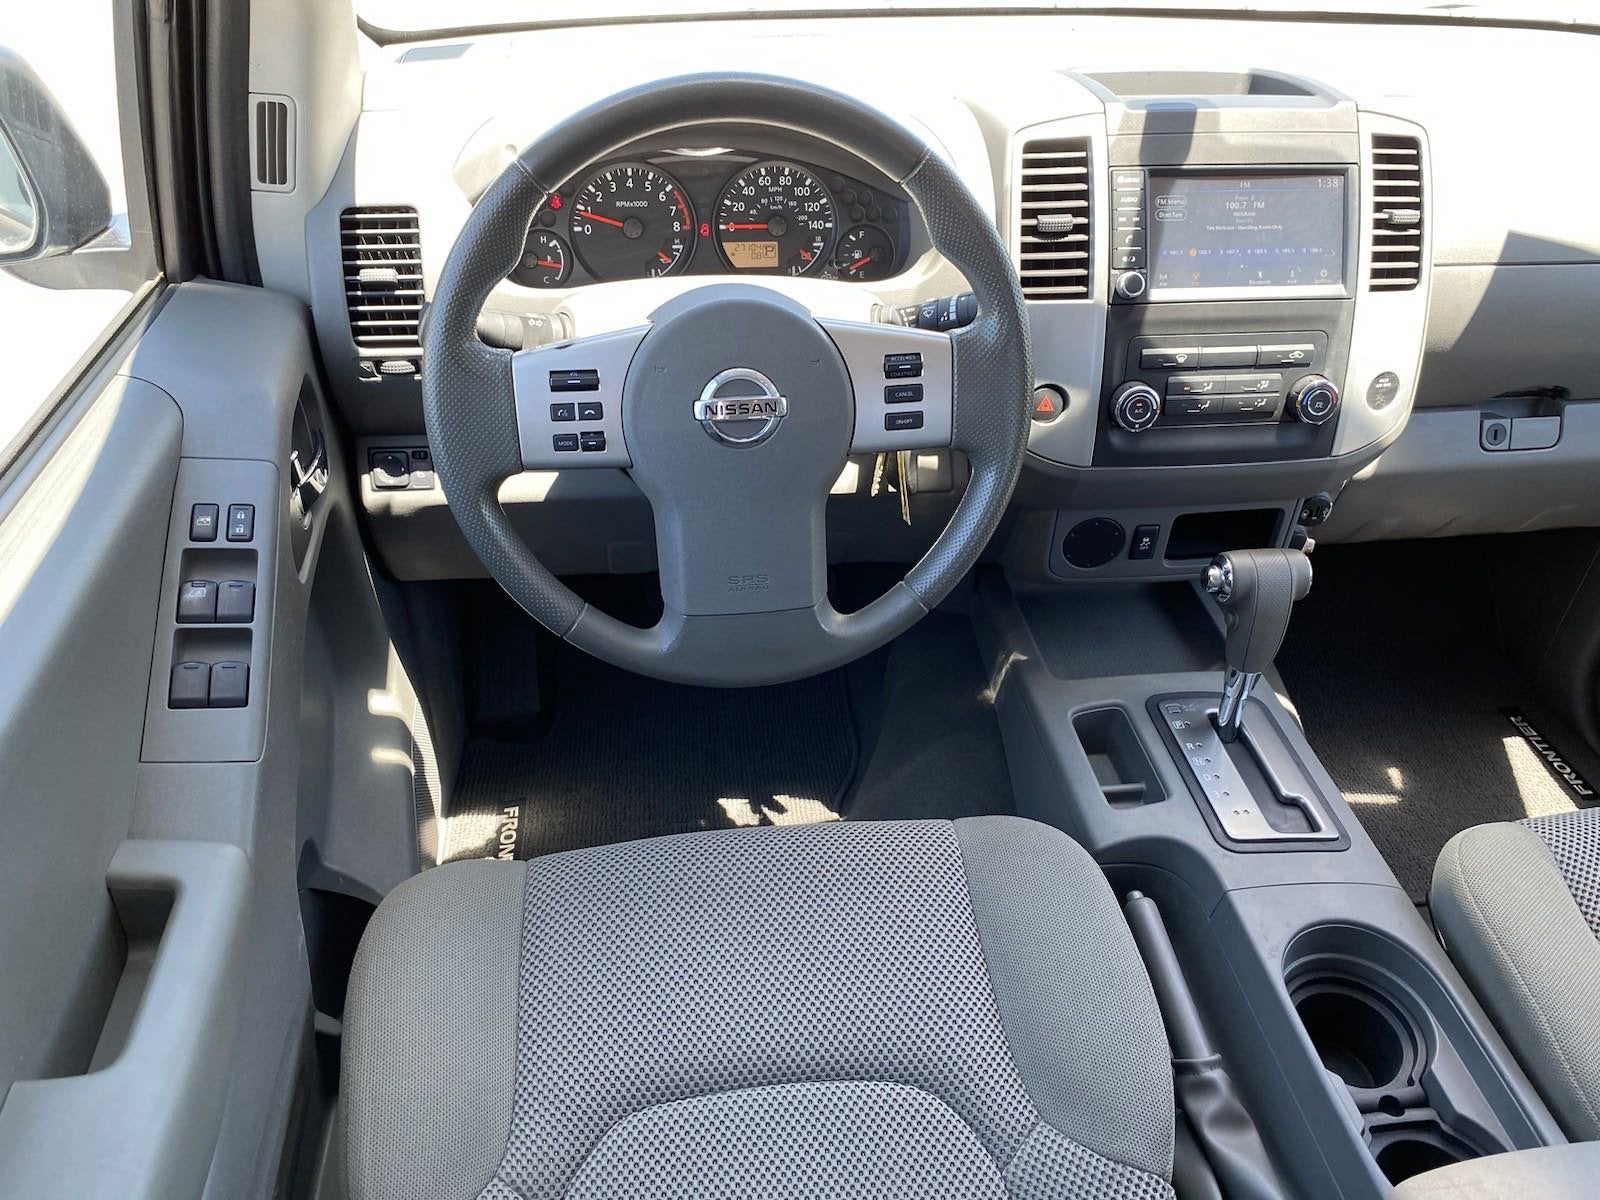 2019 Nissan Frontier Crew Cab SV V6 4x2 5-Speed Automatic Crew Cab SV